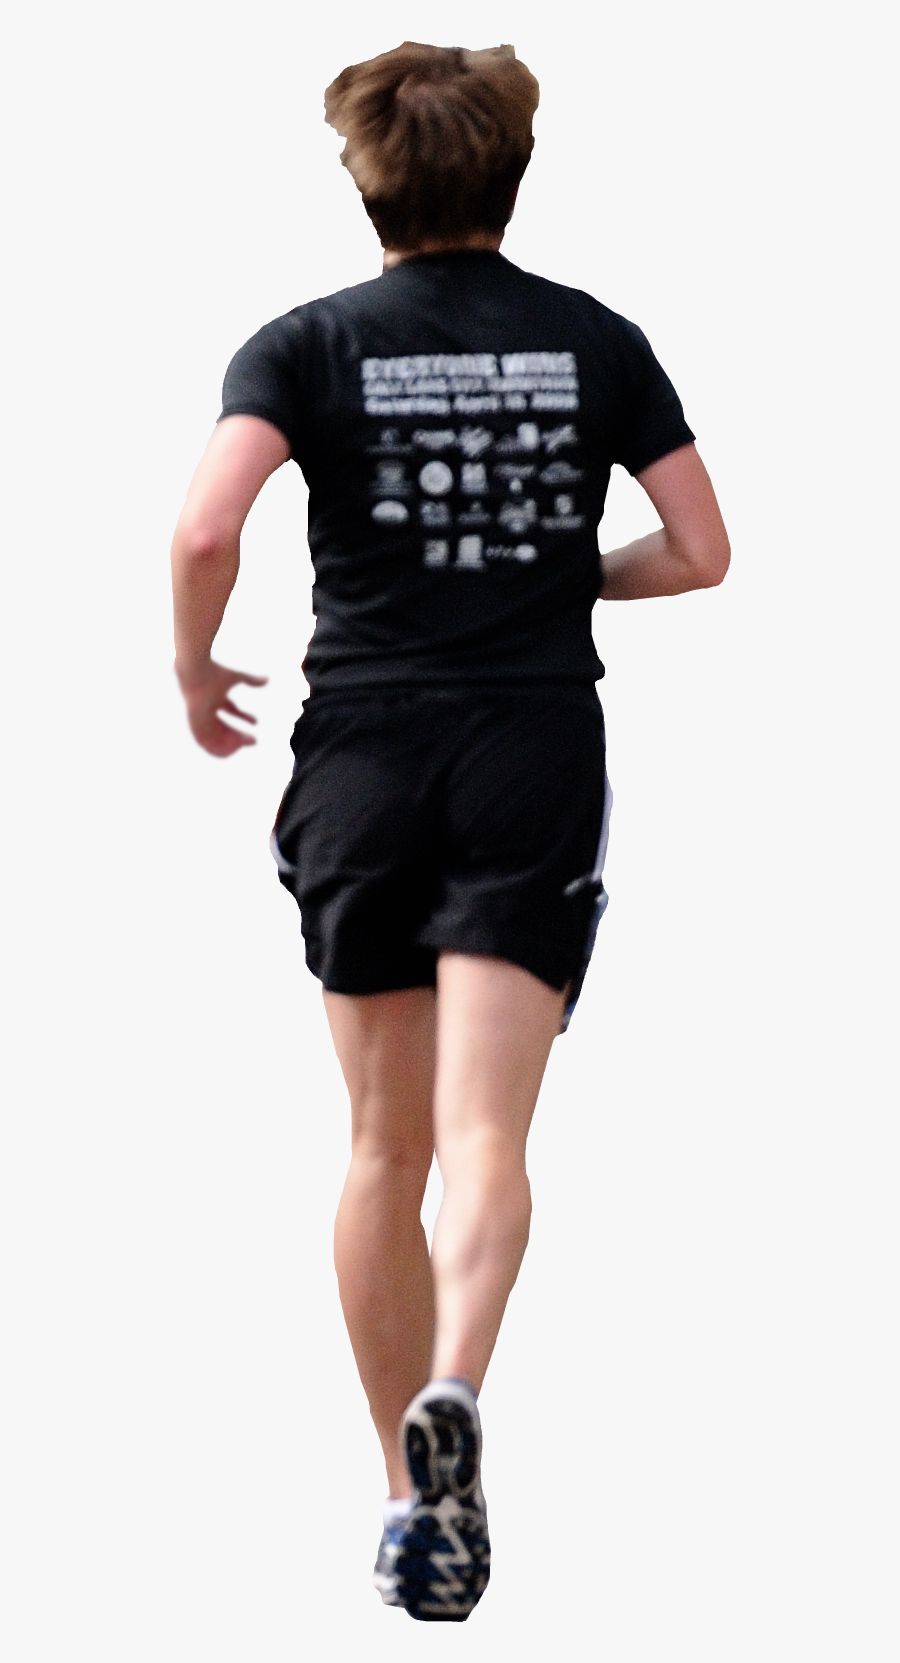 Running Man Back Png, Transparent Clipart